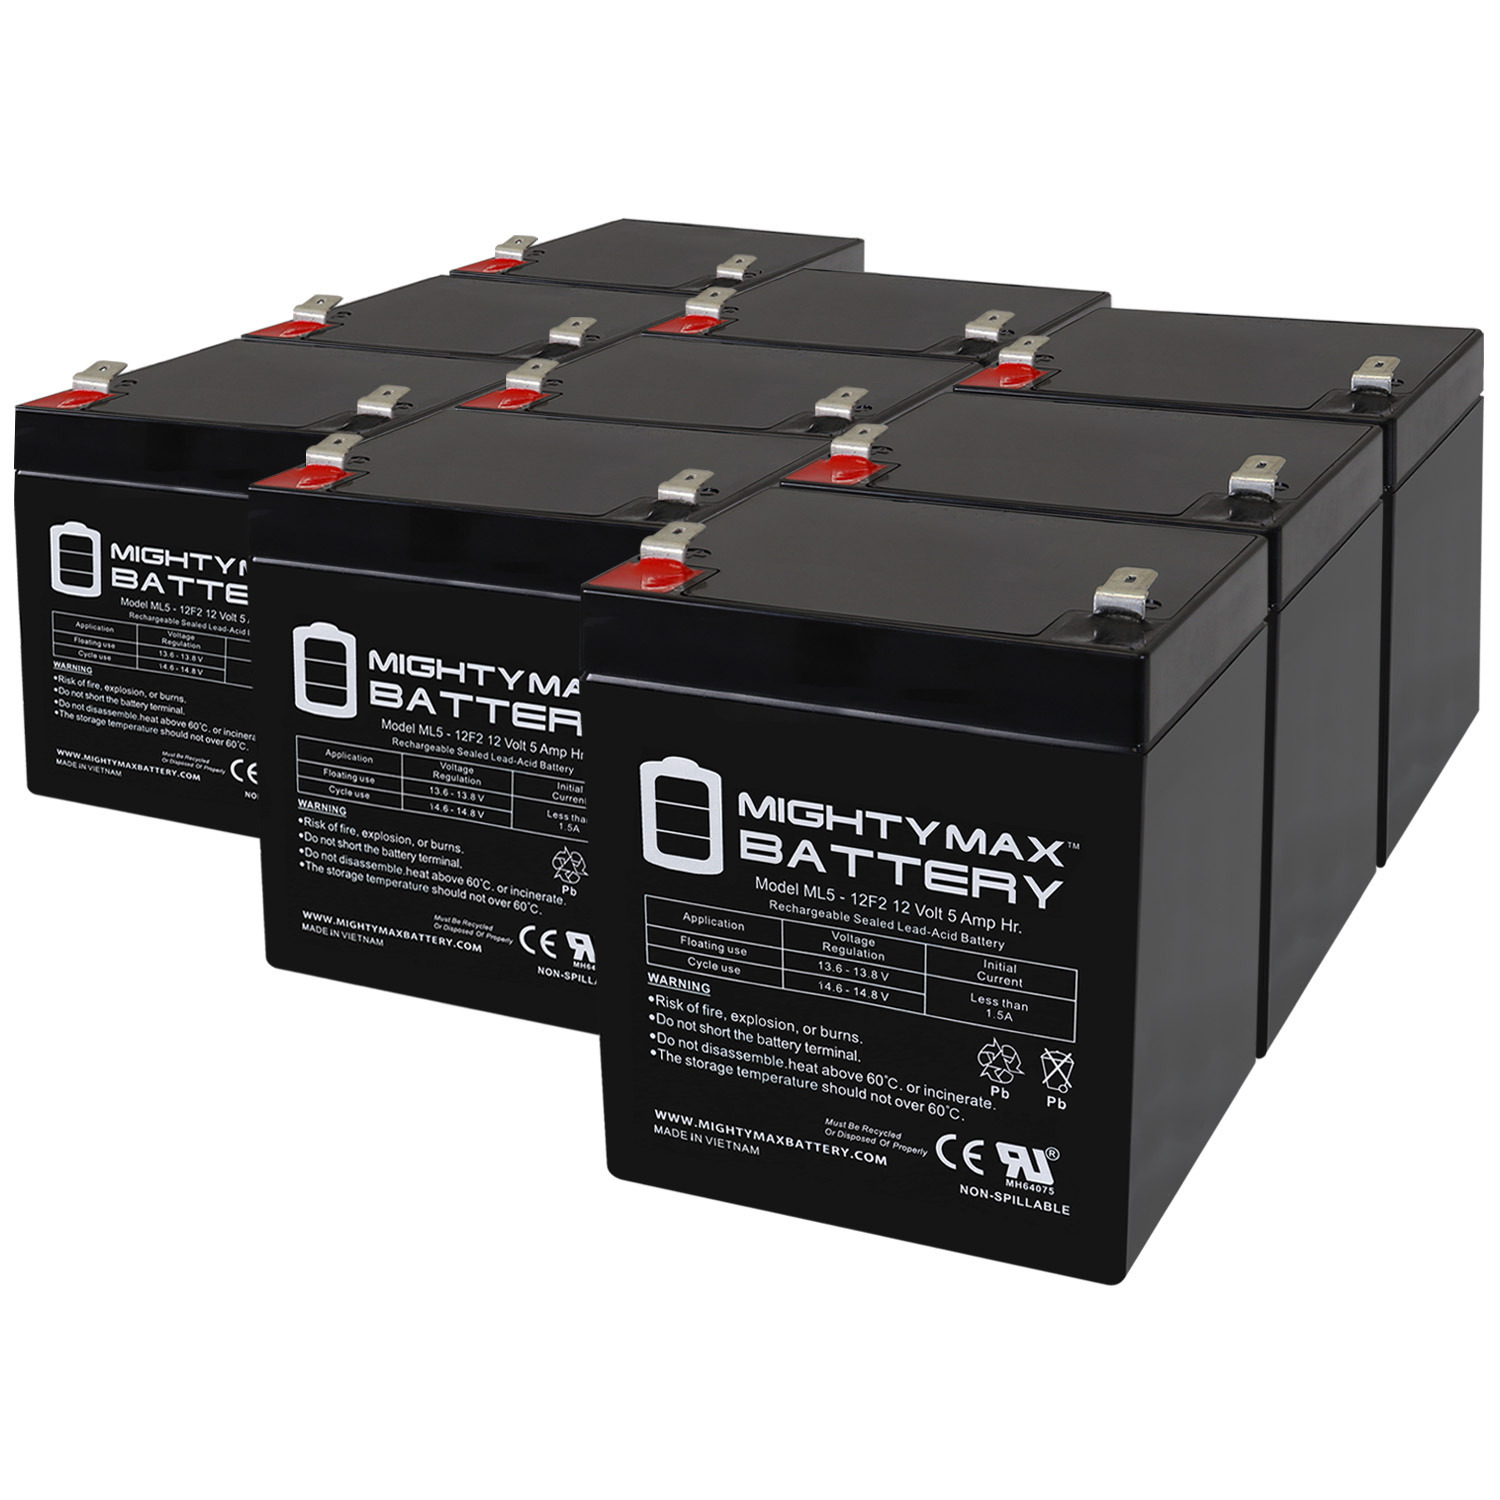 12V 5Ah F2 SLA Replacement Battery for Dorcy Spotlight 41-1067 - 9 Pack